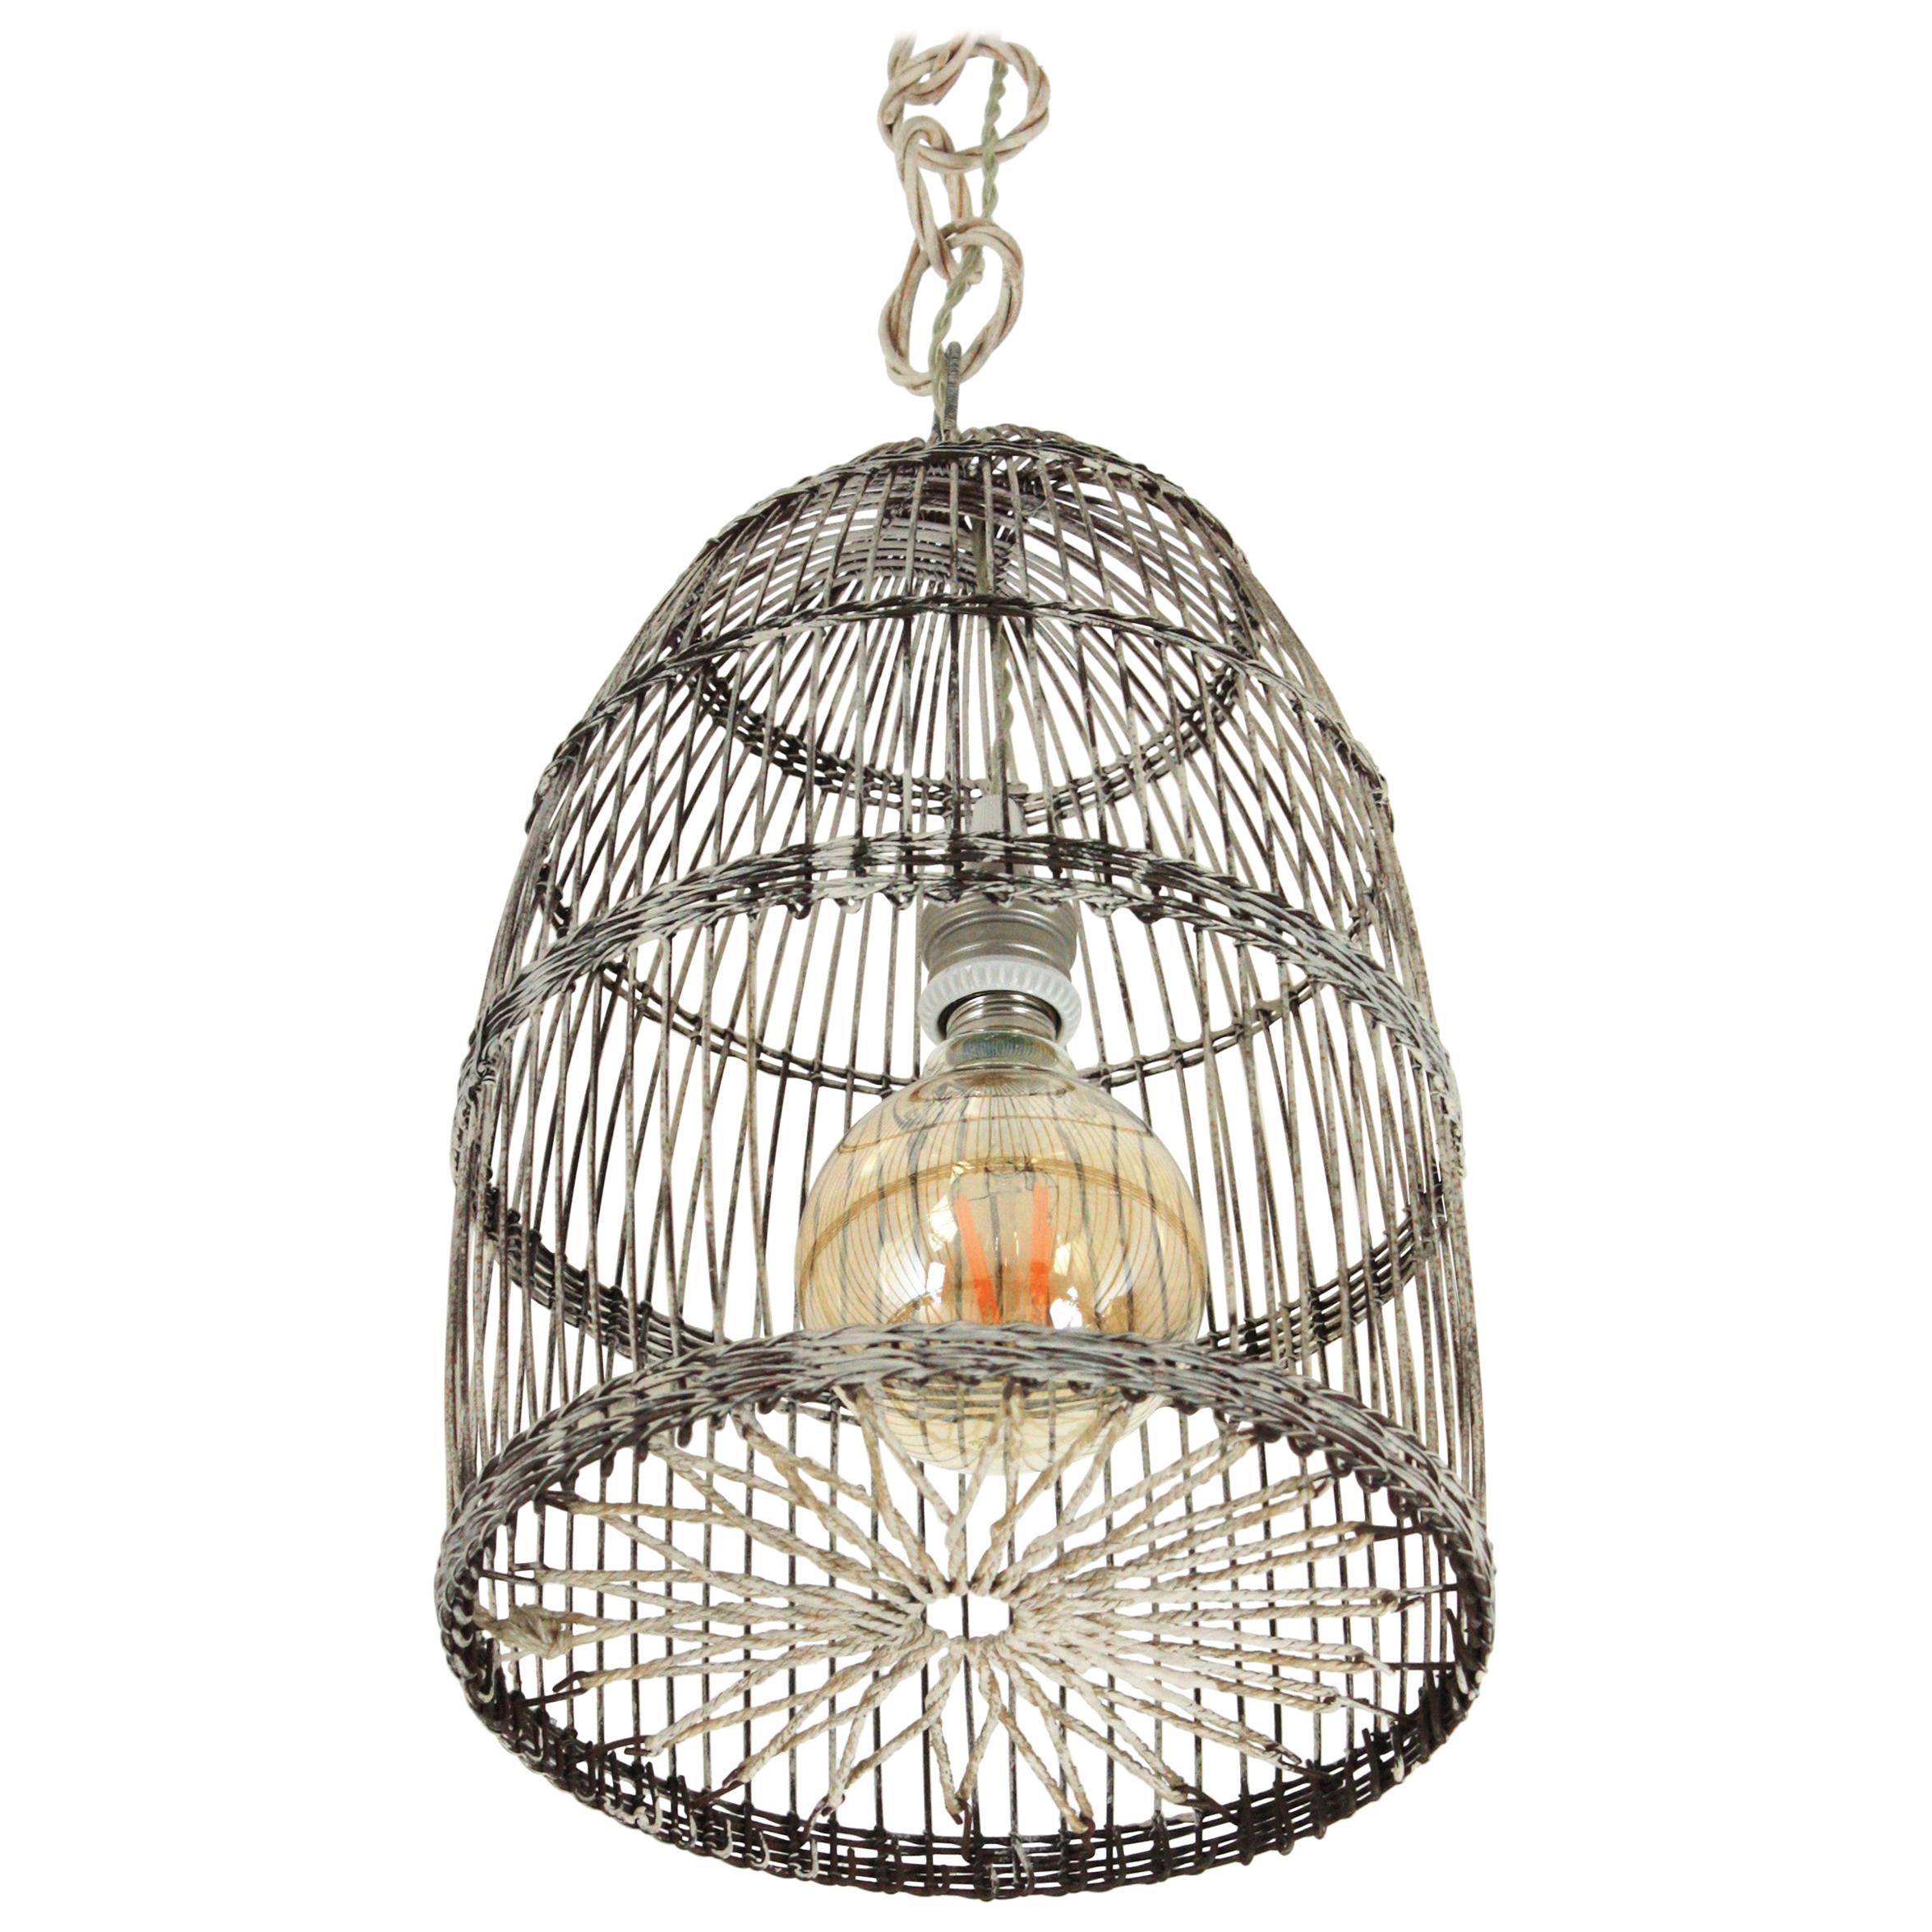 Birdcage Rustic Hanging Light Pendant Lamp